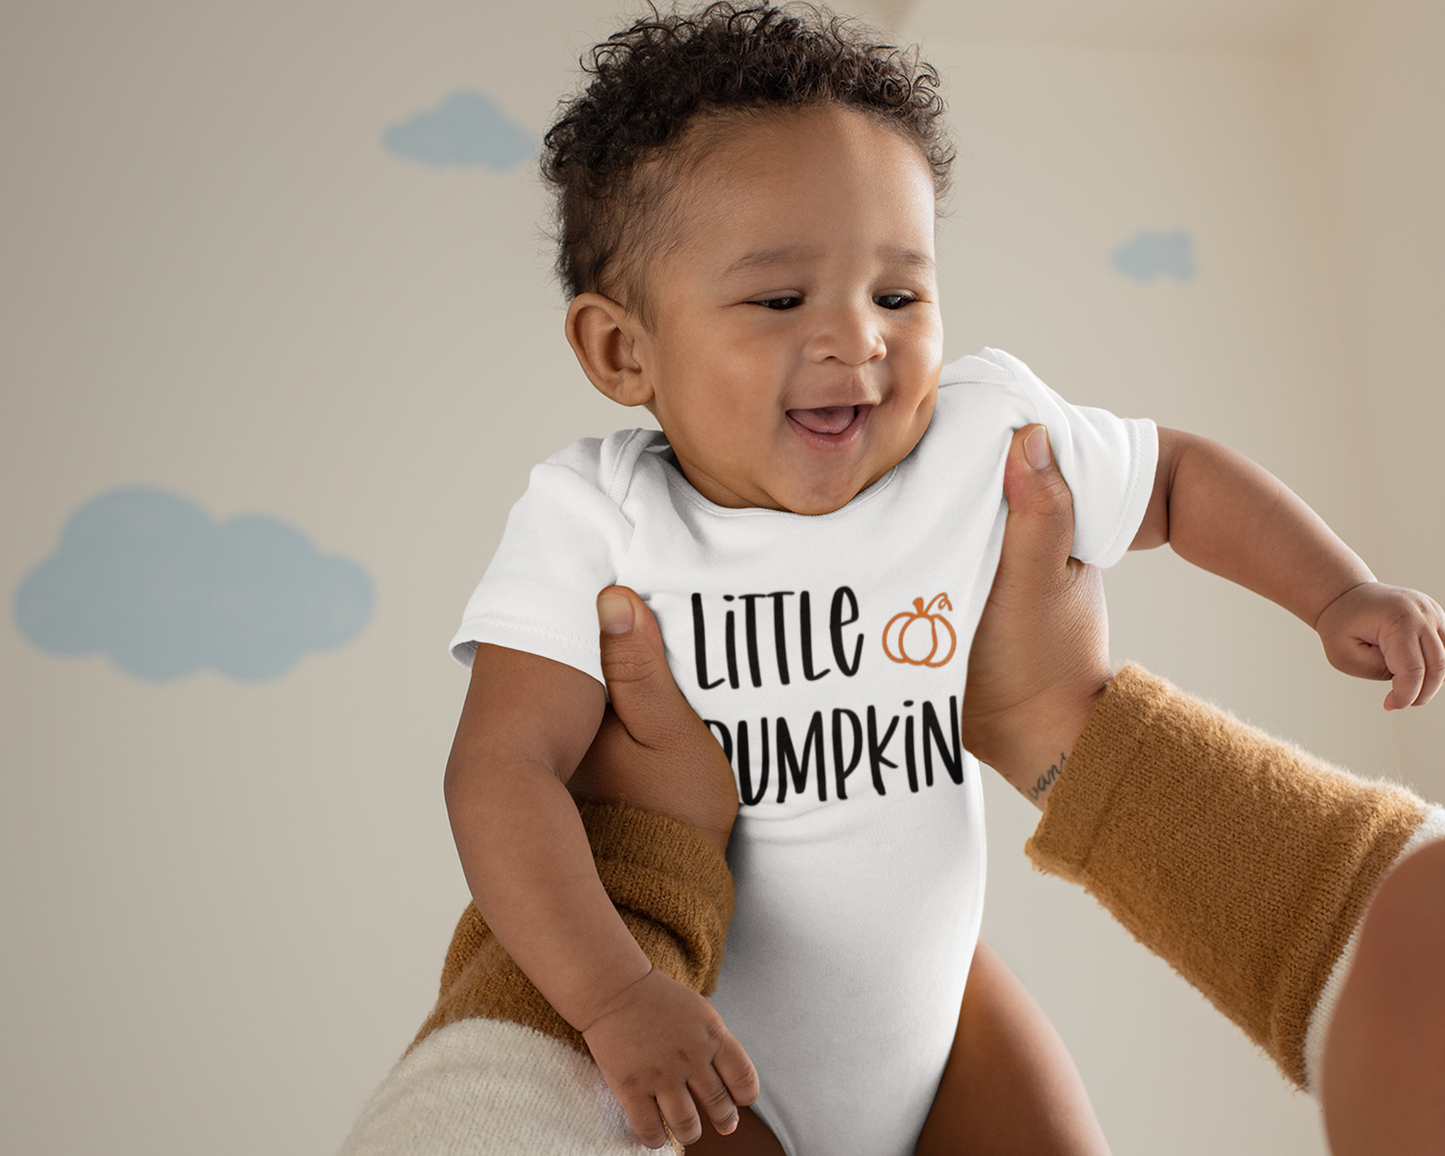 Little Pumpkin (v2) | Cute Halloween Baby Onesie Bodysuit